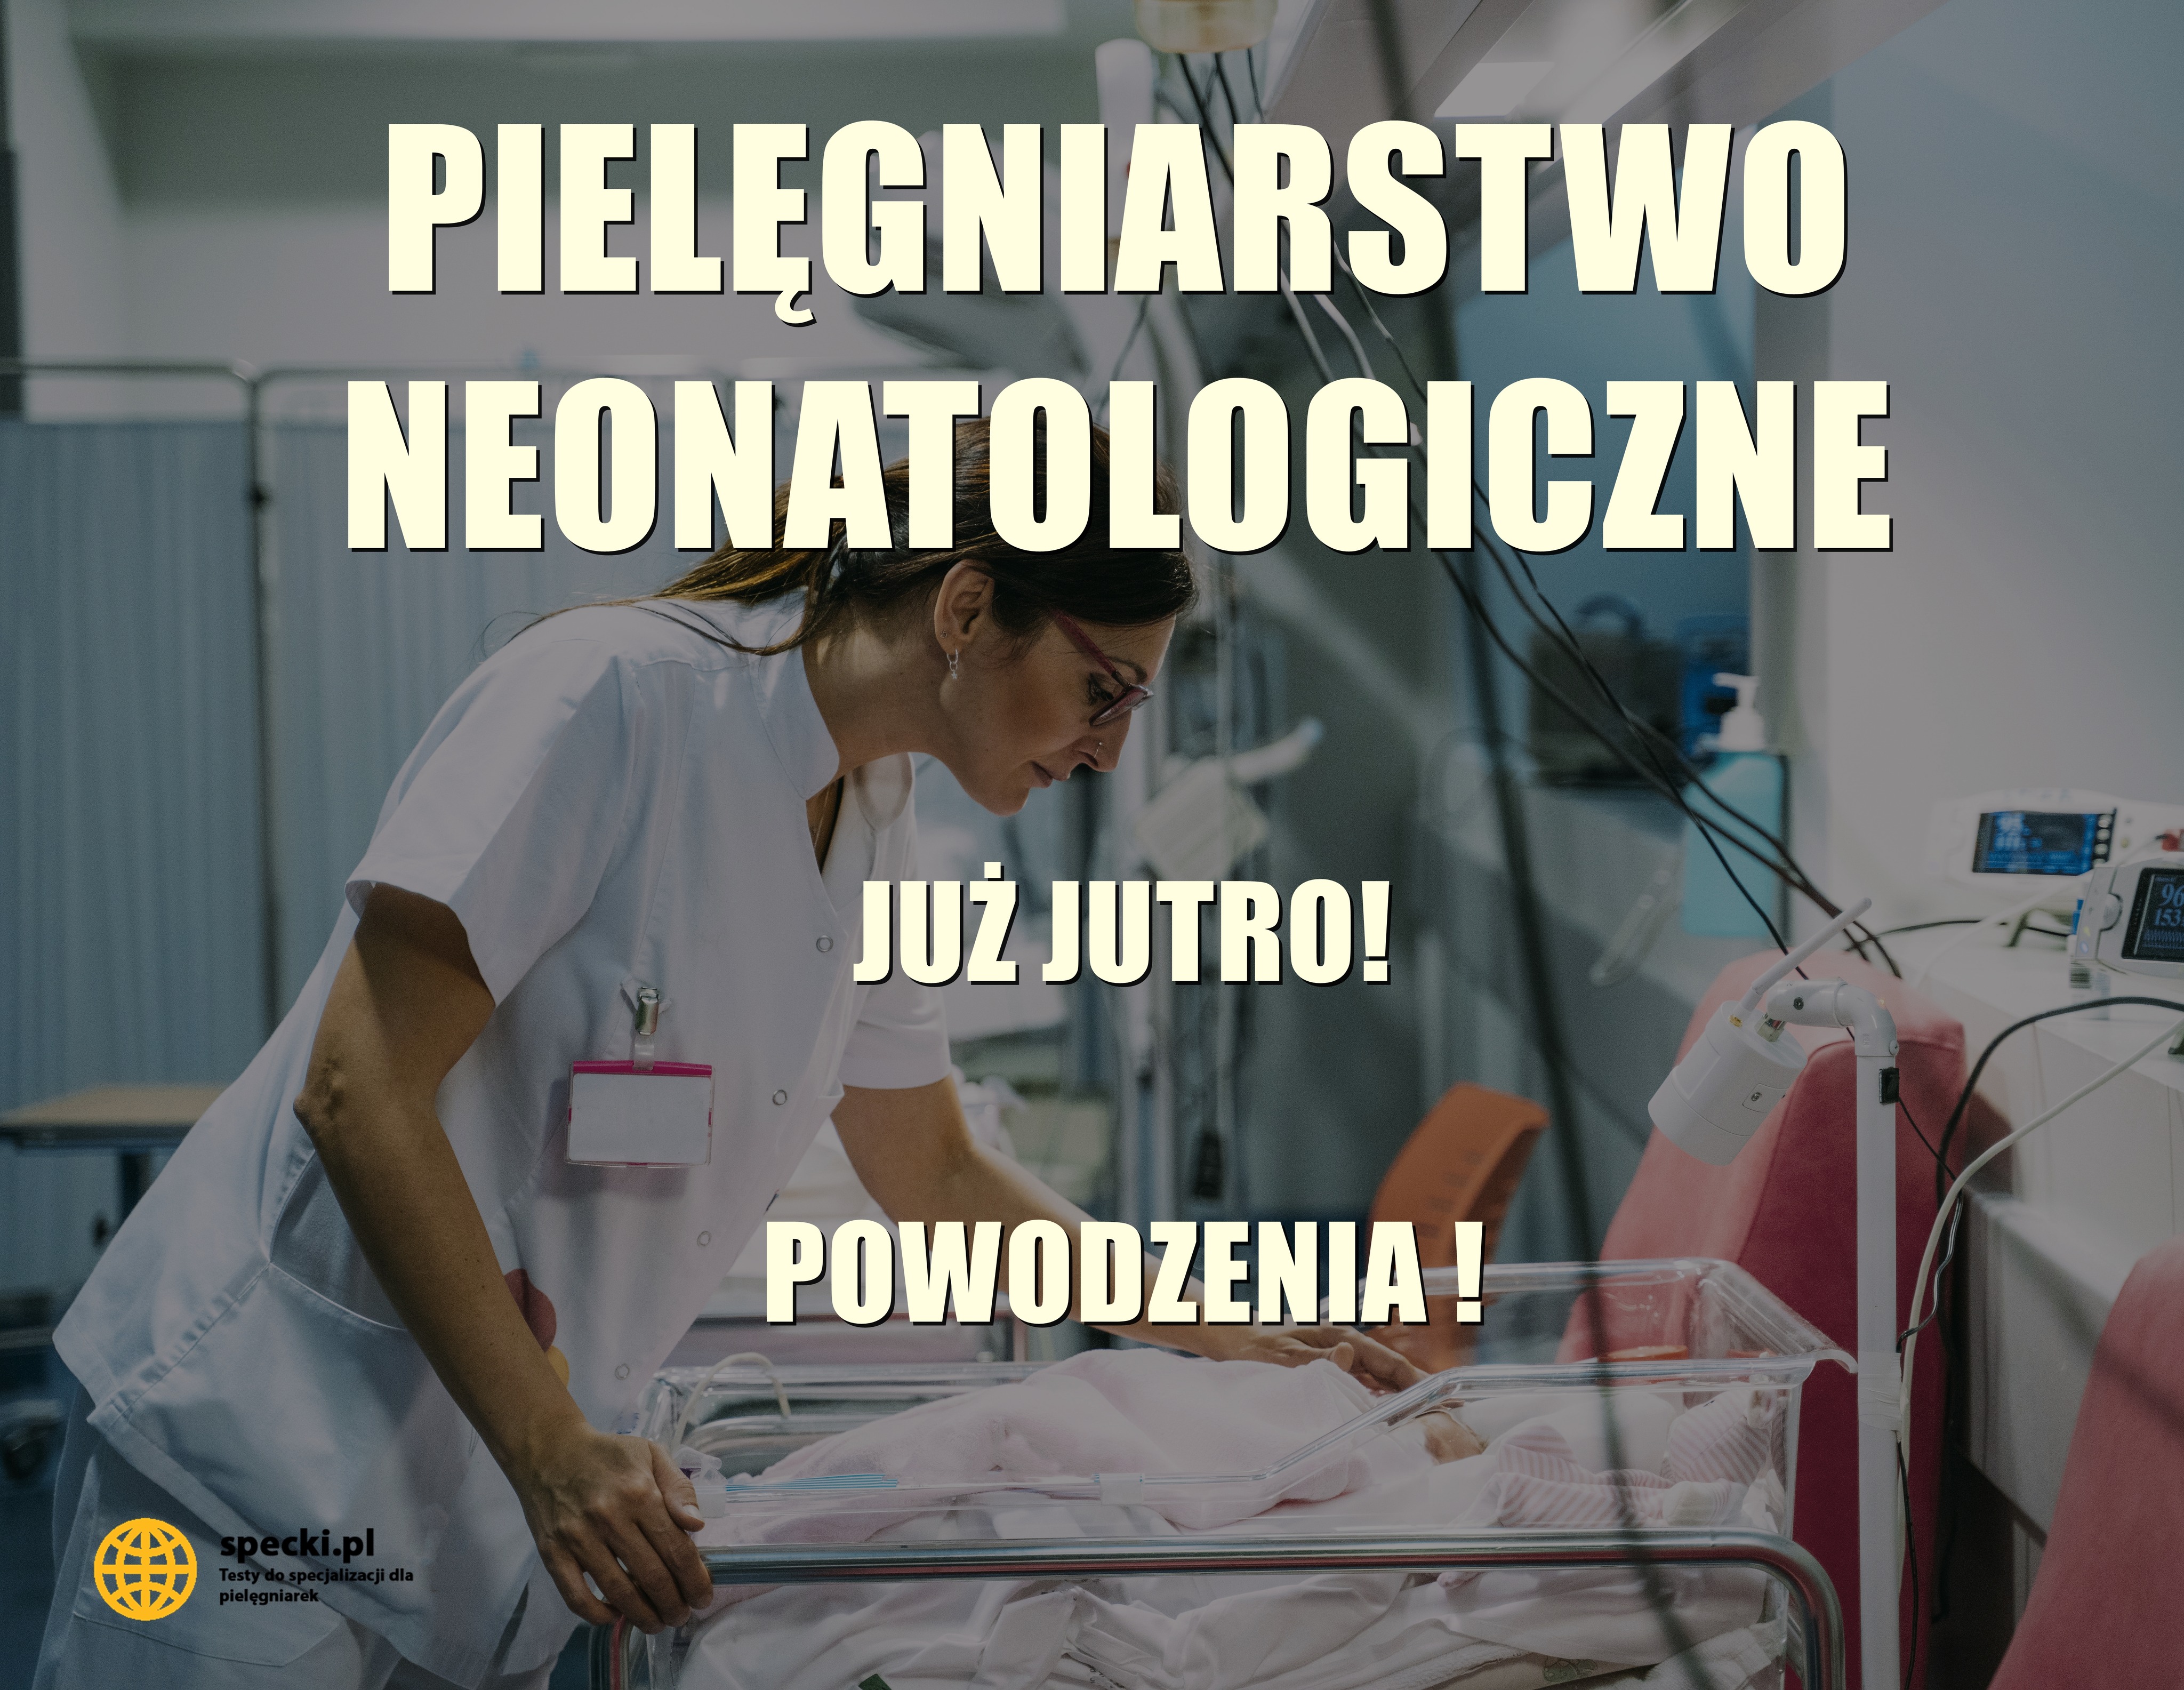 Specjalizacja neonatologiczna egzamin